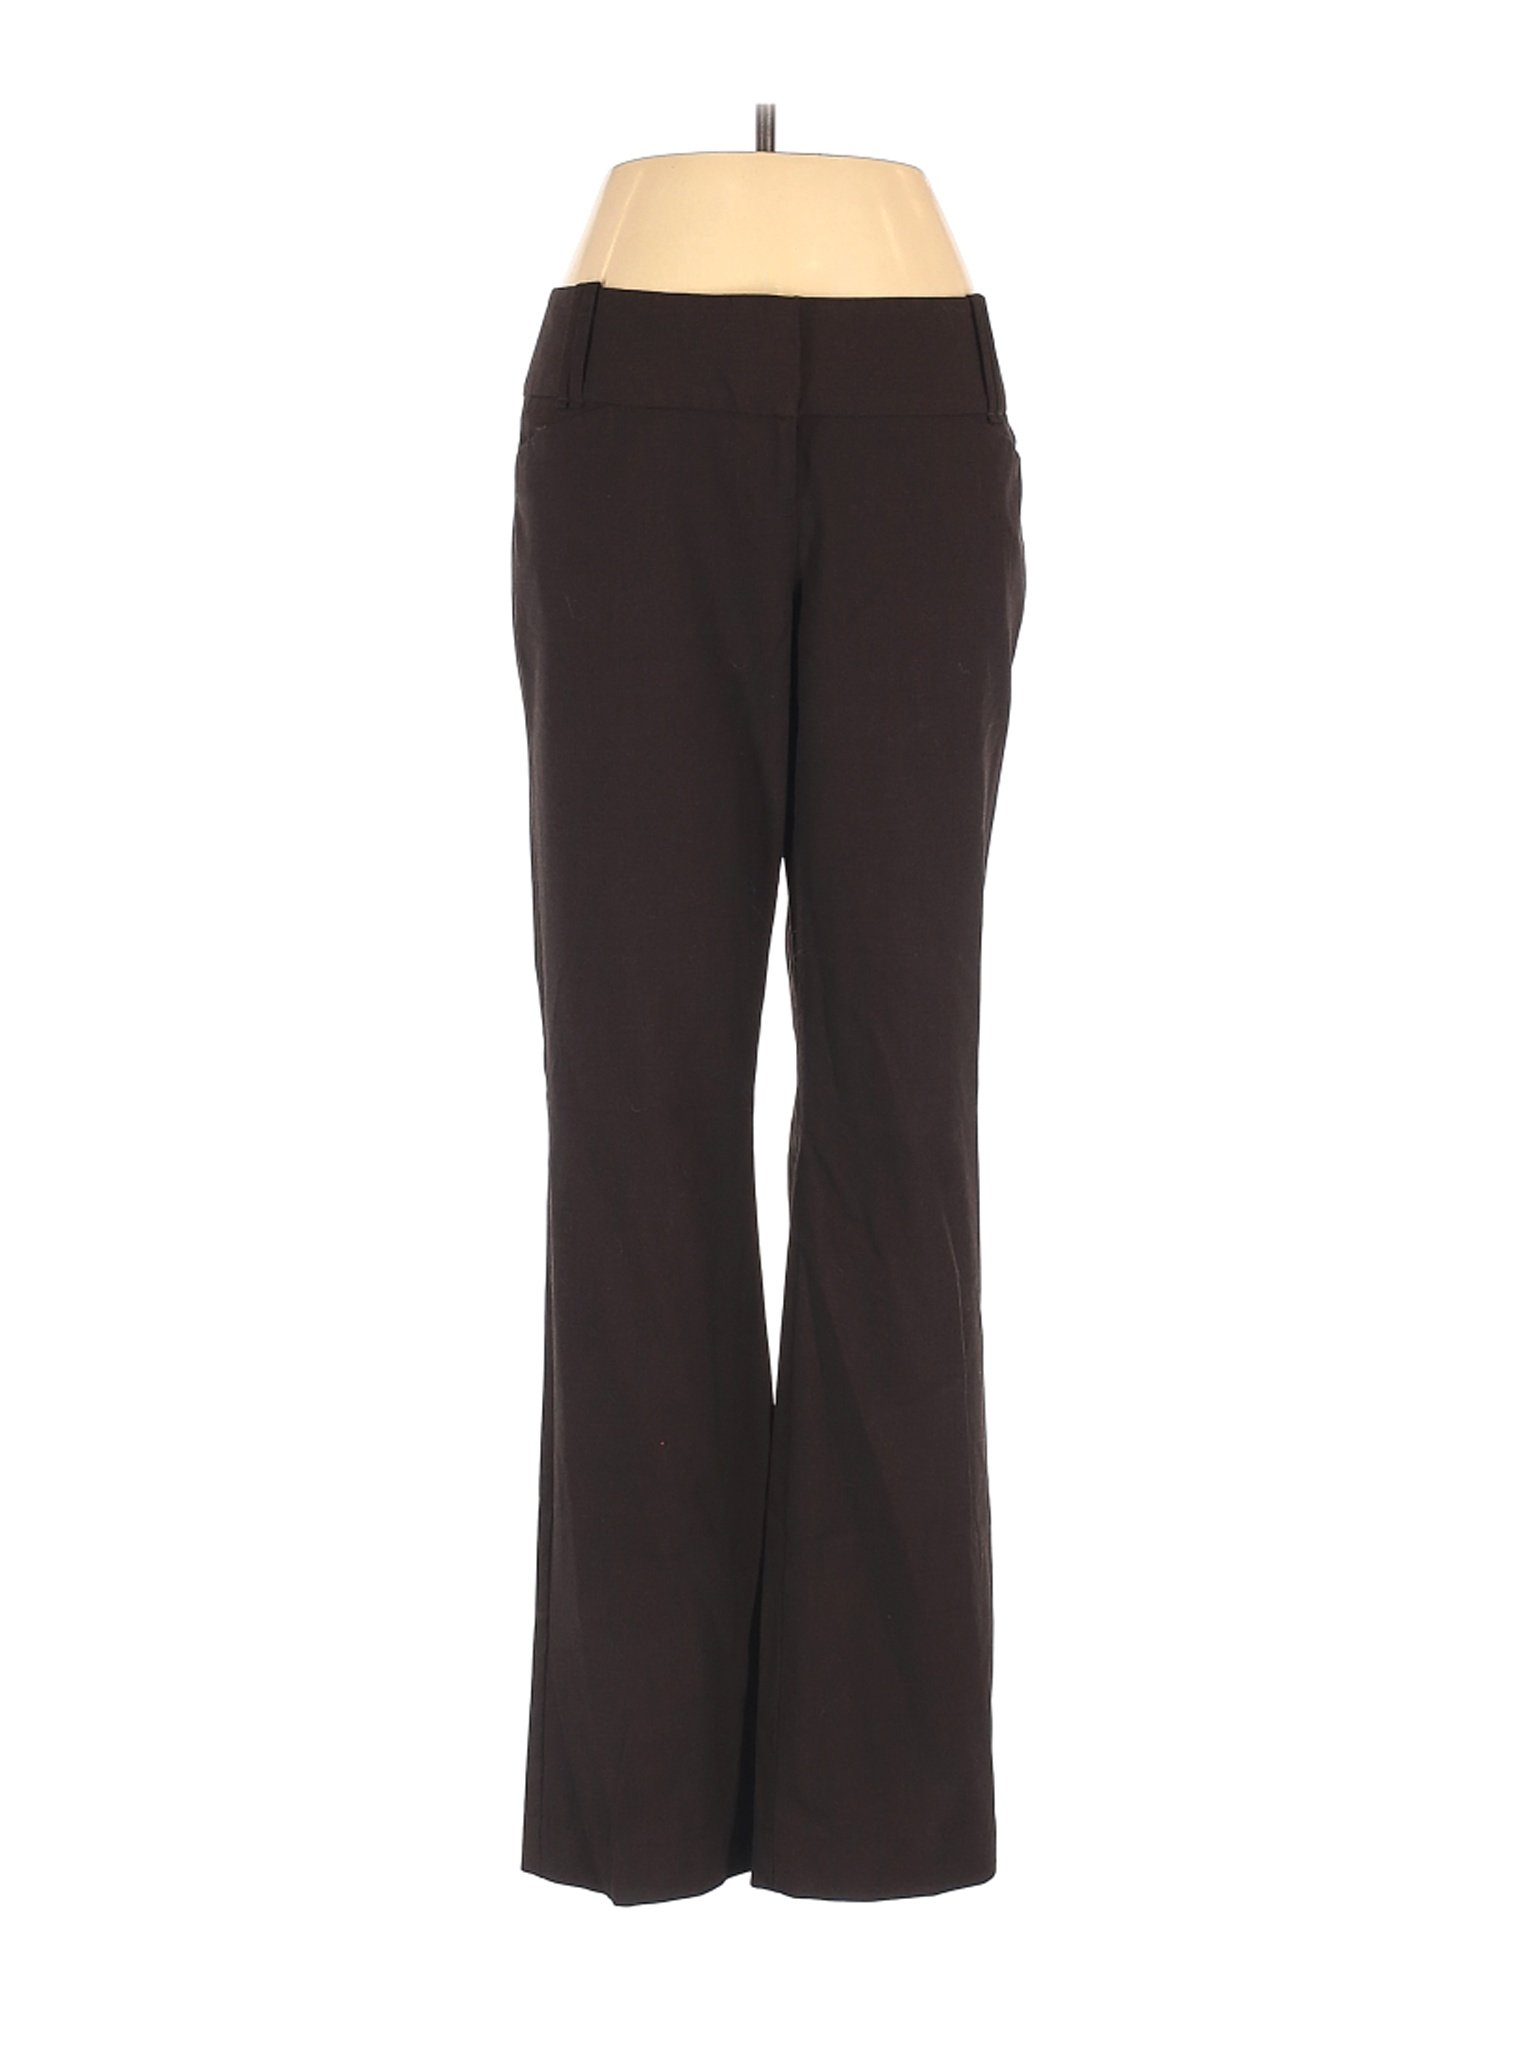 The Limited Women Brown Dress Pants 4 | eBay